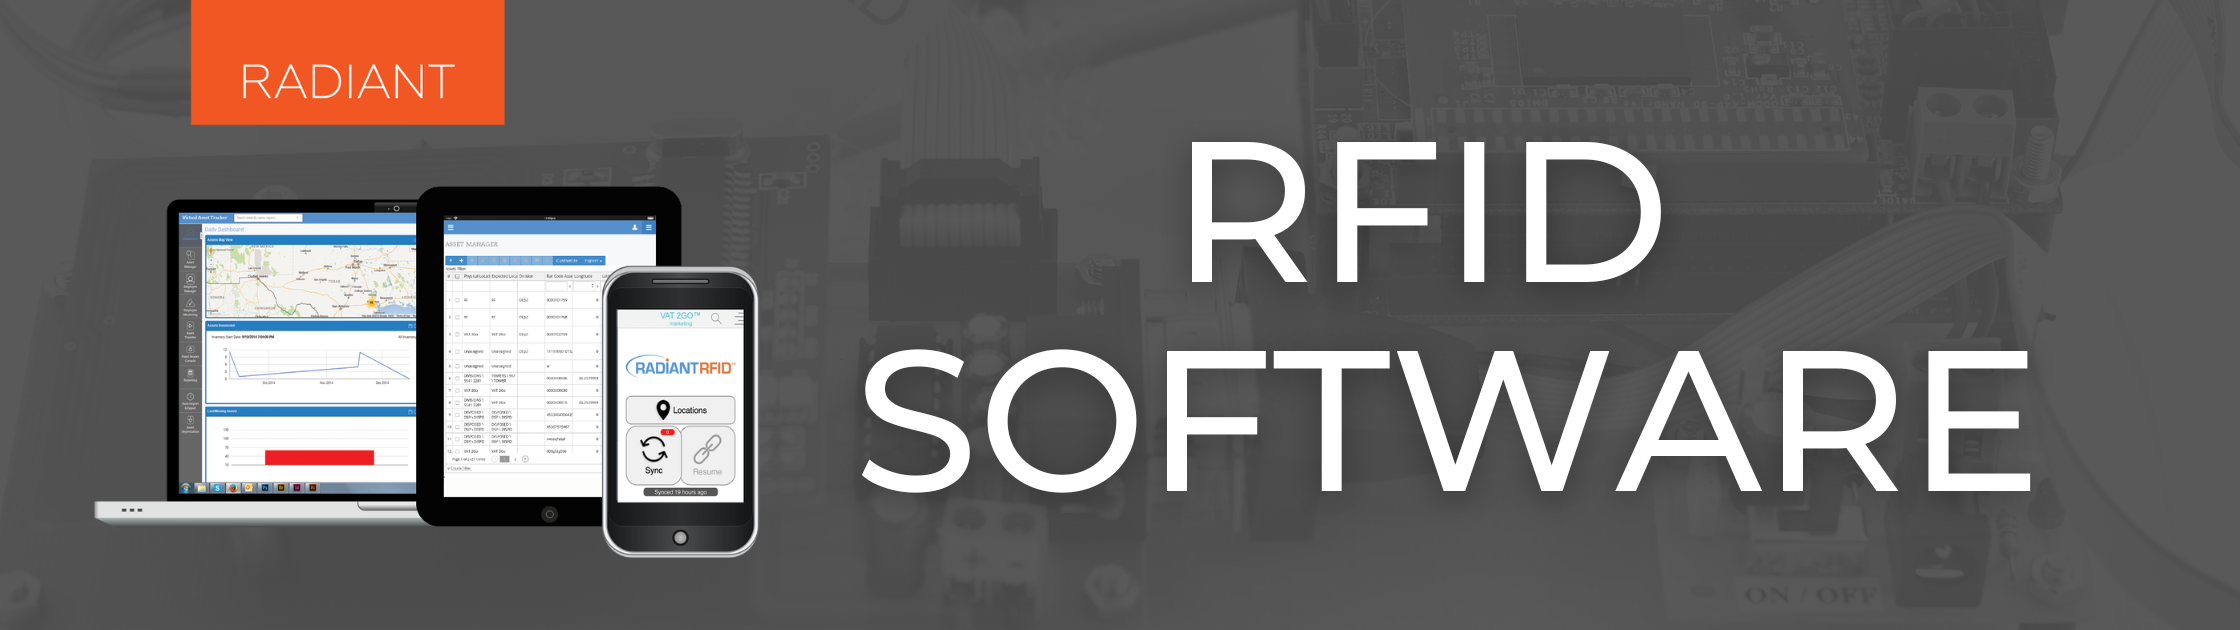 RFID System - RFID Systems - RFID System Components of an RFID Solution - RFID System Components - RFID Software - RFID Parts - RFID Software Solution - RFID Solutions